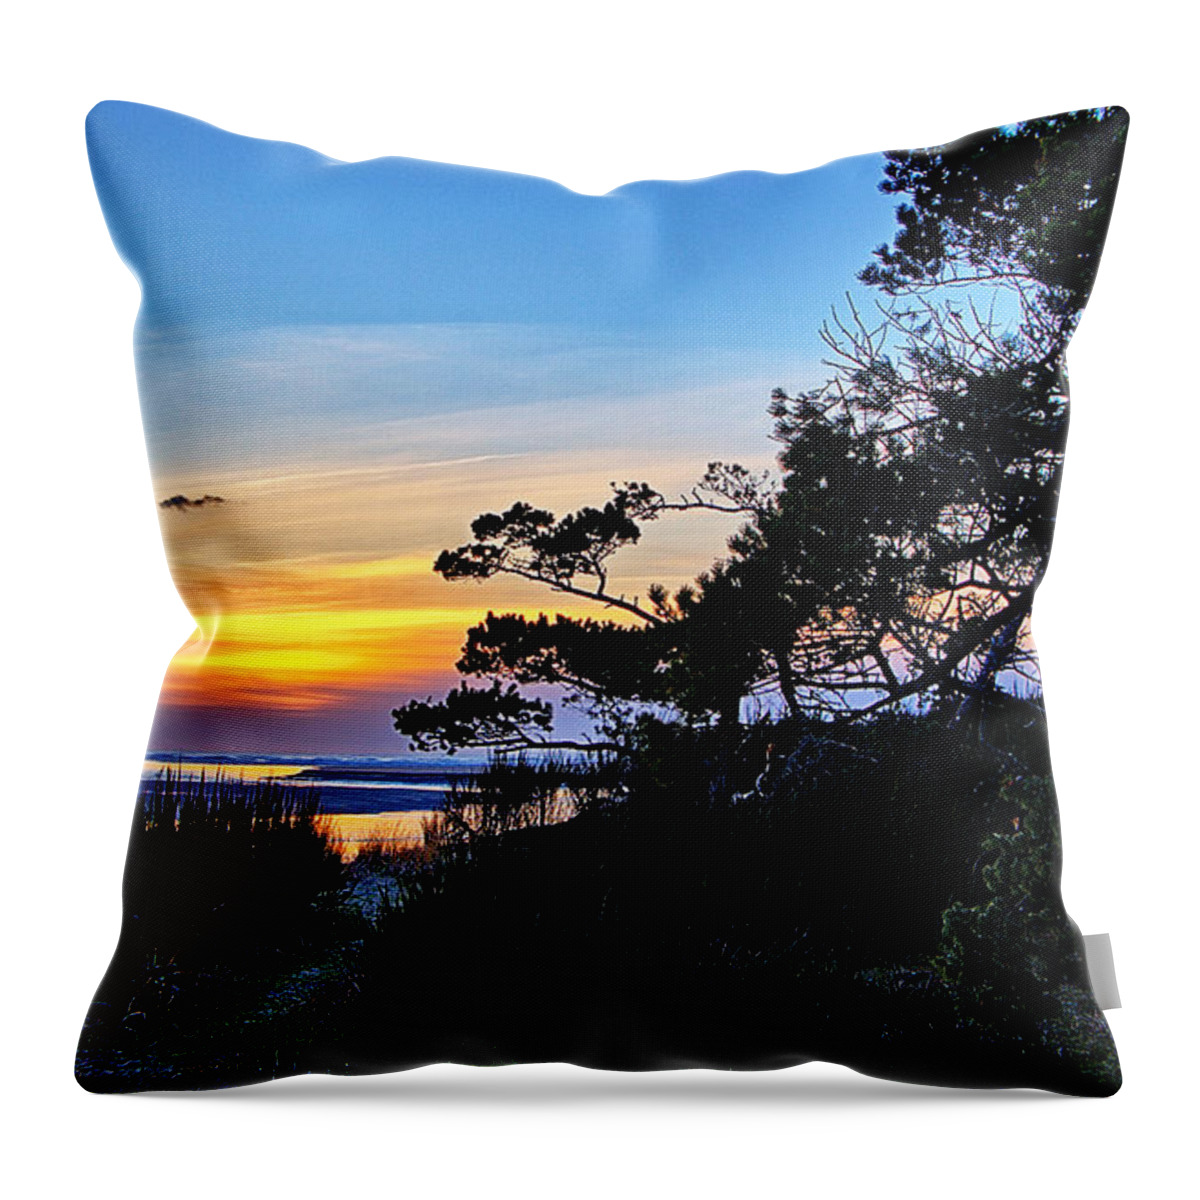 Sandlake Throw Pillow featuring the photograph Sand Lake Sunset by Chriss Pagani